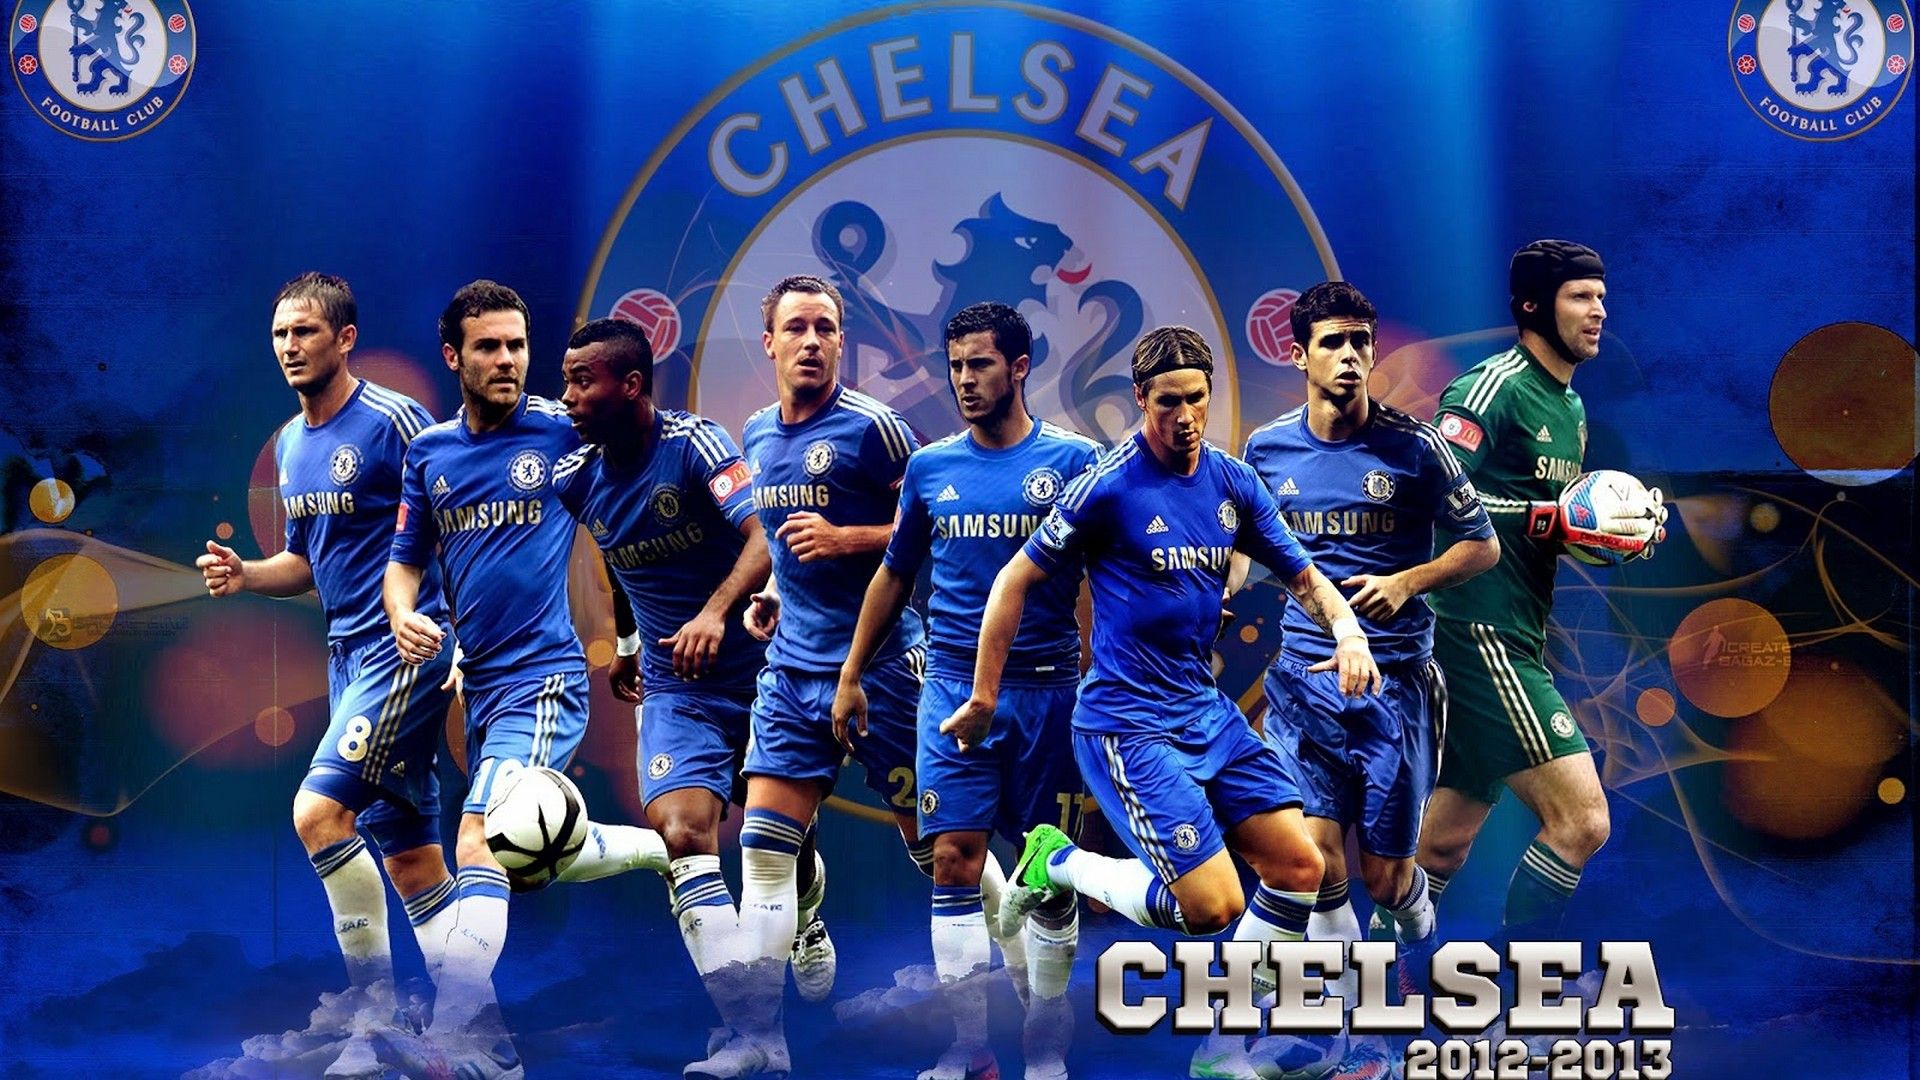 Chelsea Champions League Desktop Wallpaper Football Wallpaper